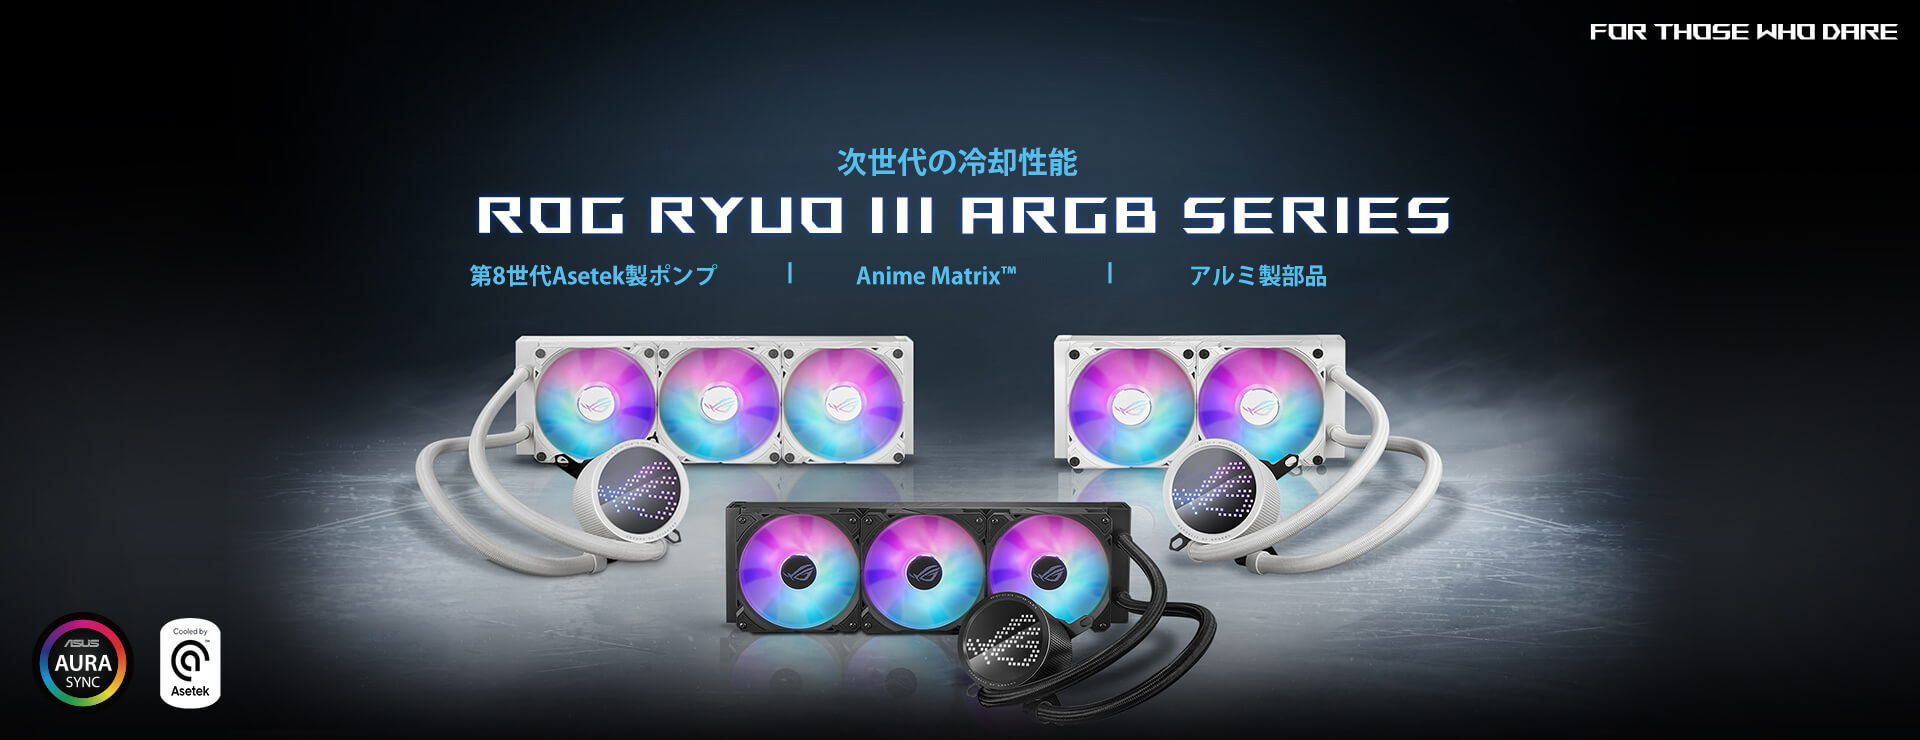 ROG Ryuo III 360 ARGB banner